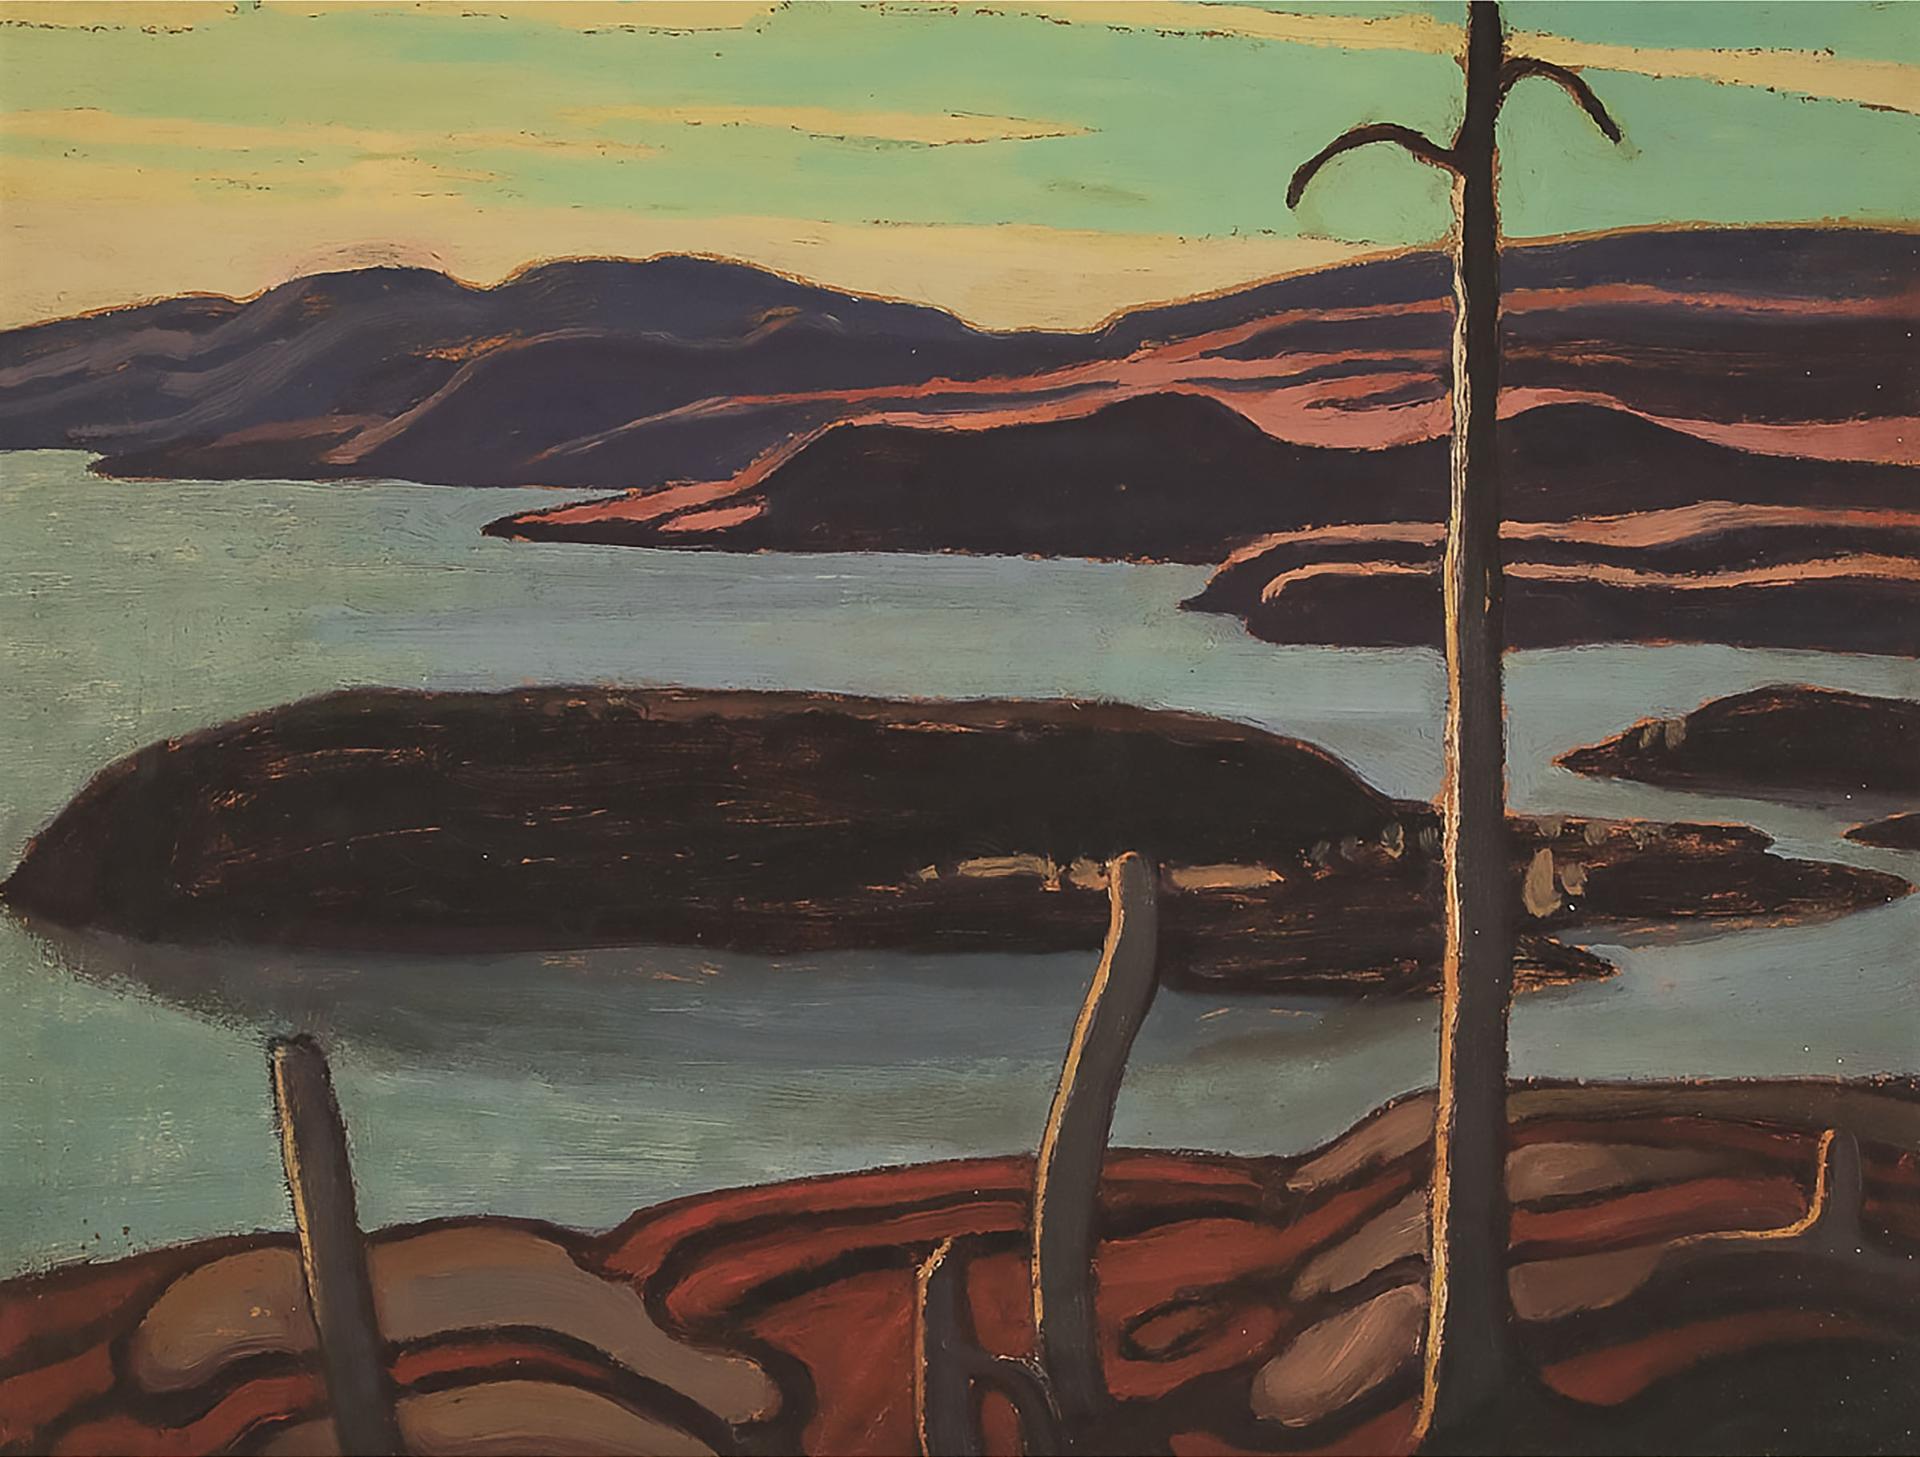 Lawren Stewart Harris (1885-1970) - Late Sun, North Shore, Lake Superior, 1924